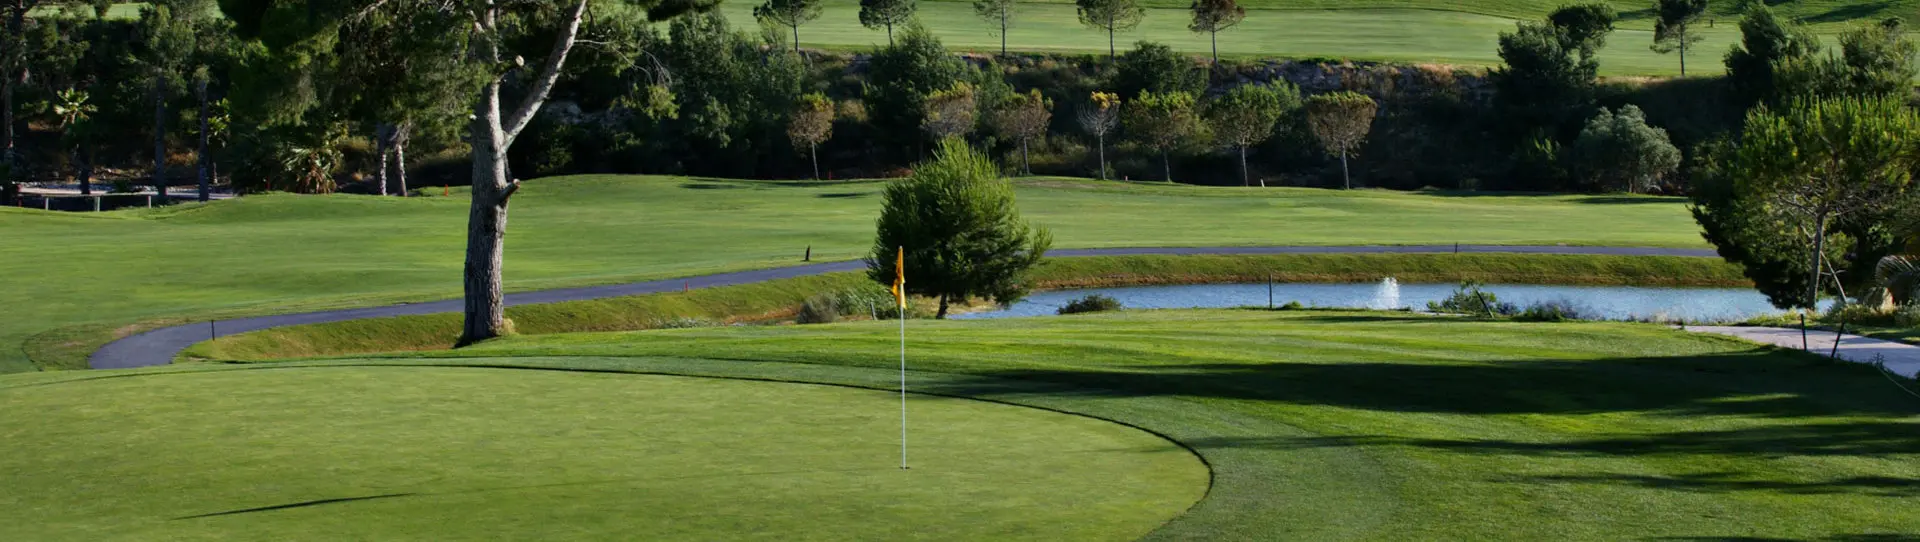 Spain golf courses - Alenda Golf - Photo 3